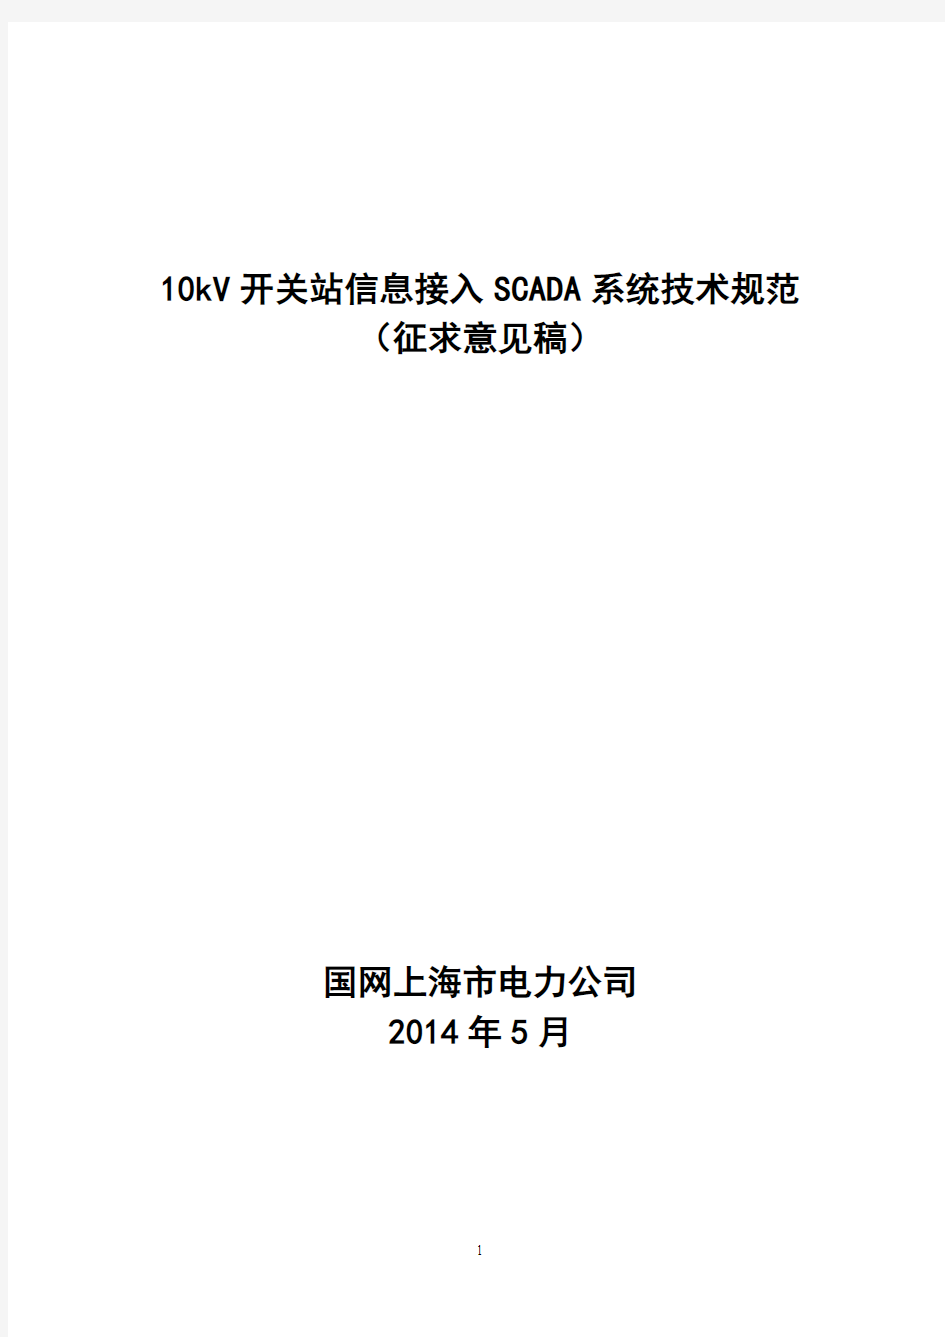 10kV开关站信息接入SCADA系统技术规范20140514.